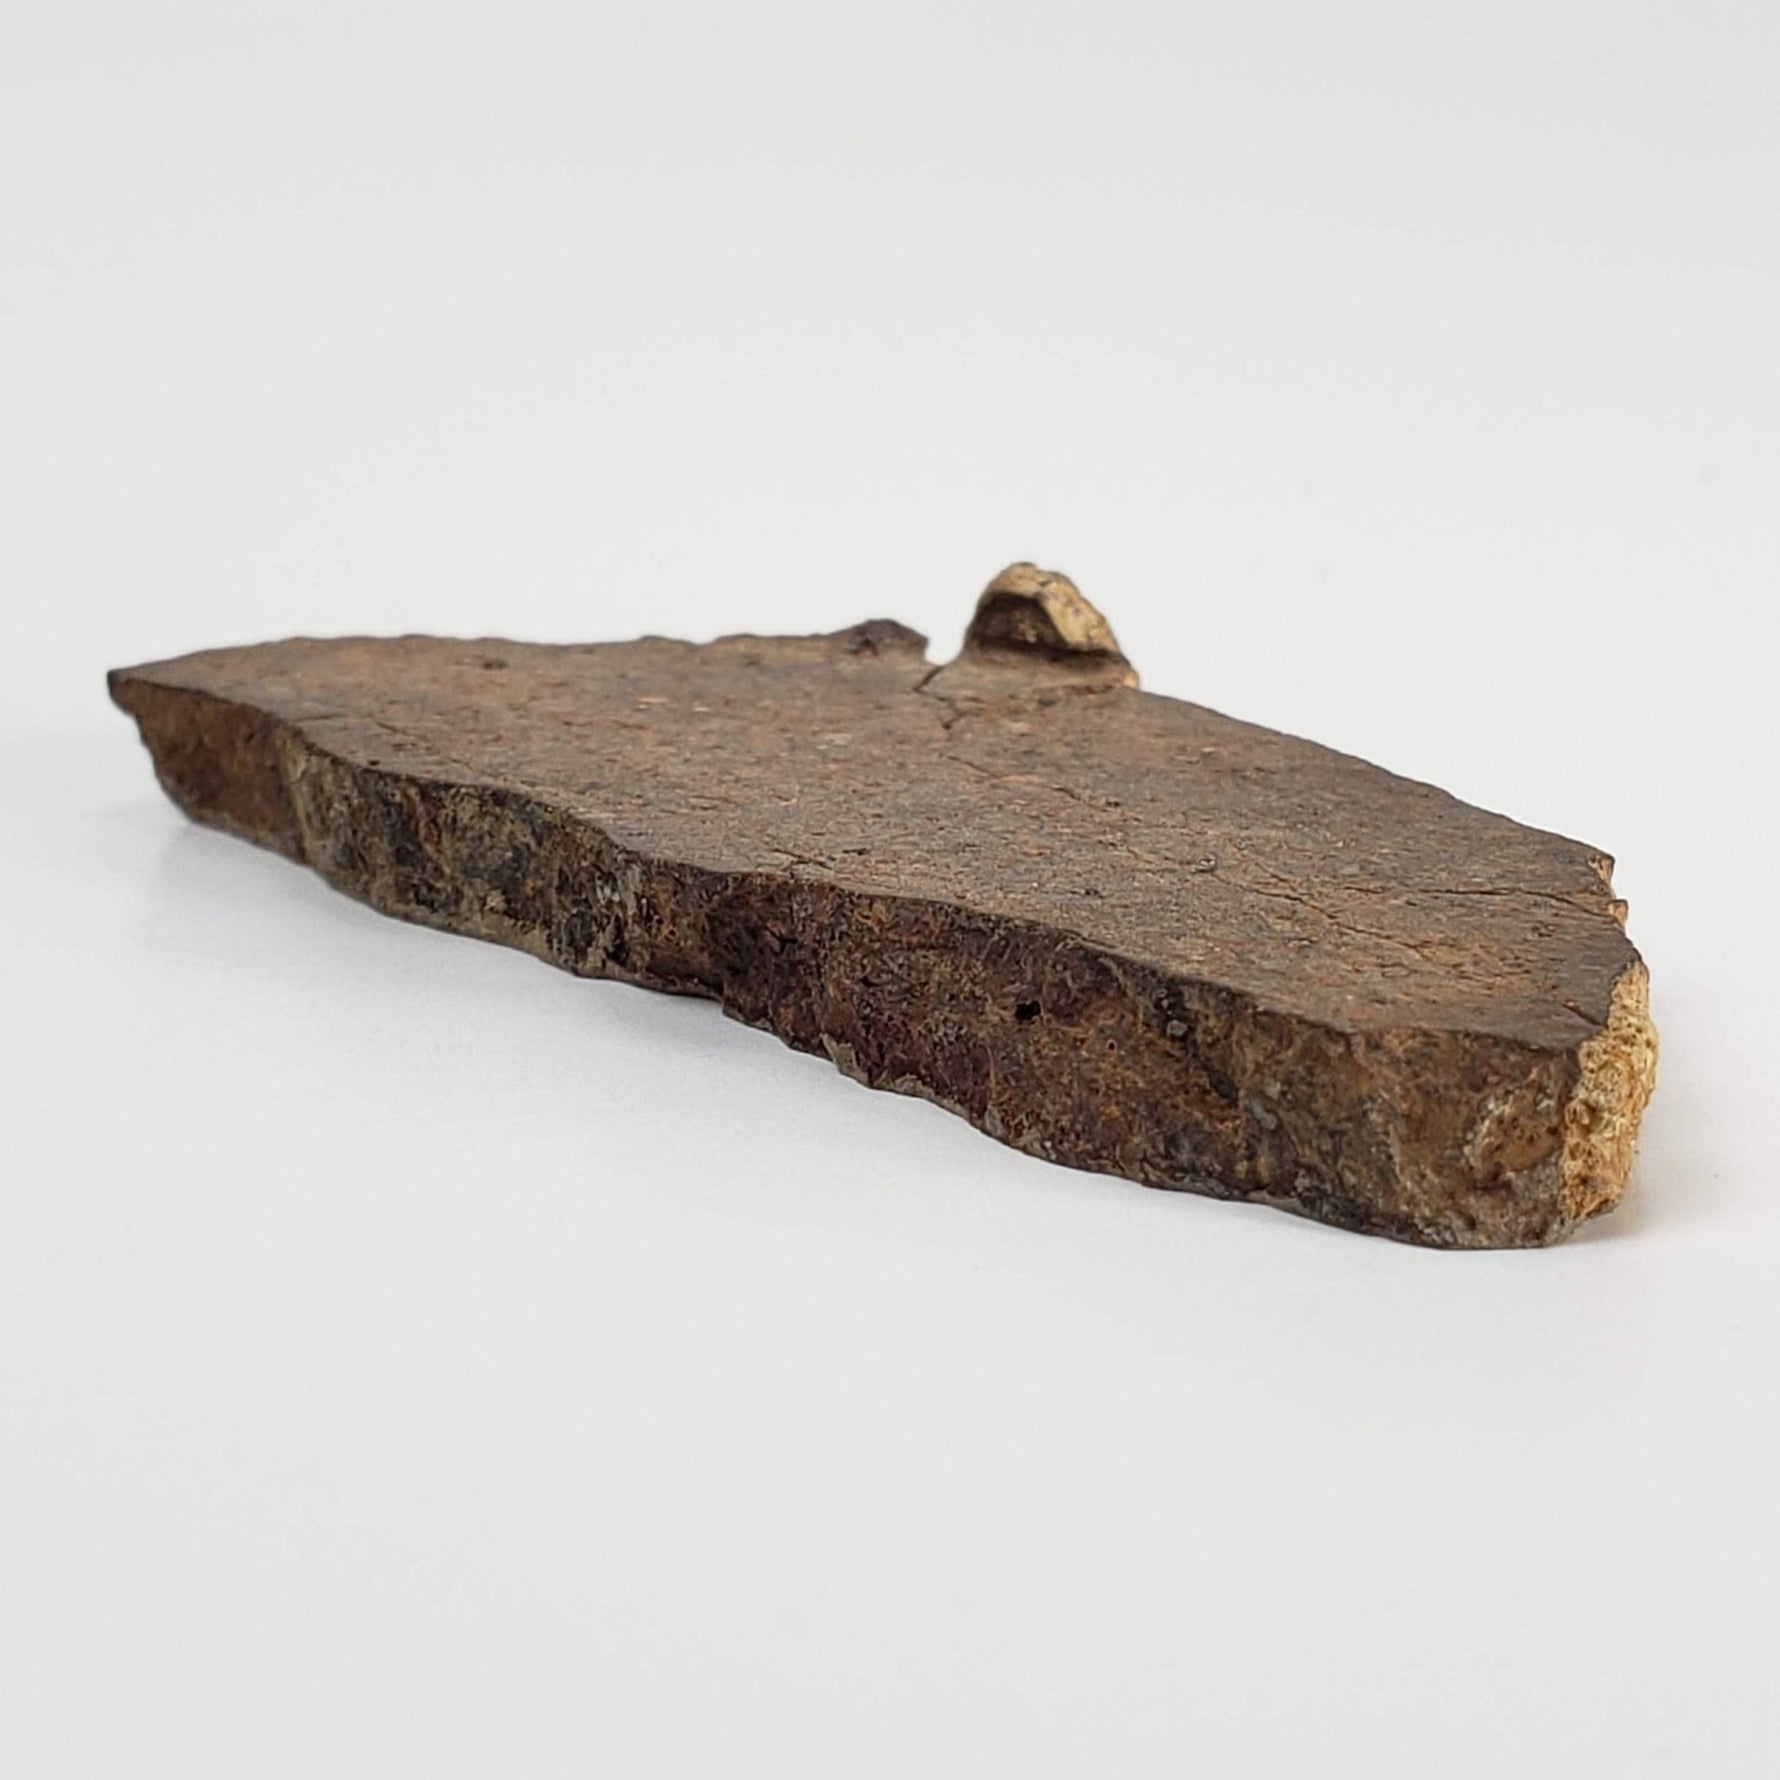 Shisr Shi 010 Meteorite | 11.3 Grams | Slice | L5 Chondrite | Rare | Shisr Desert, Oman